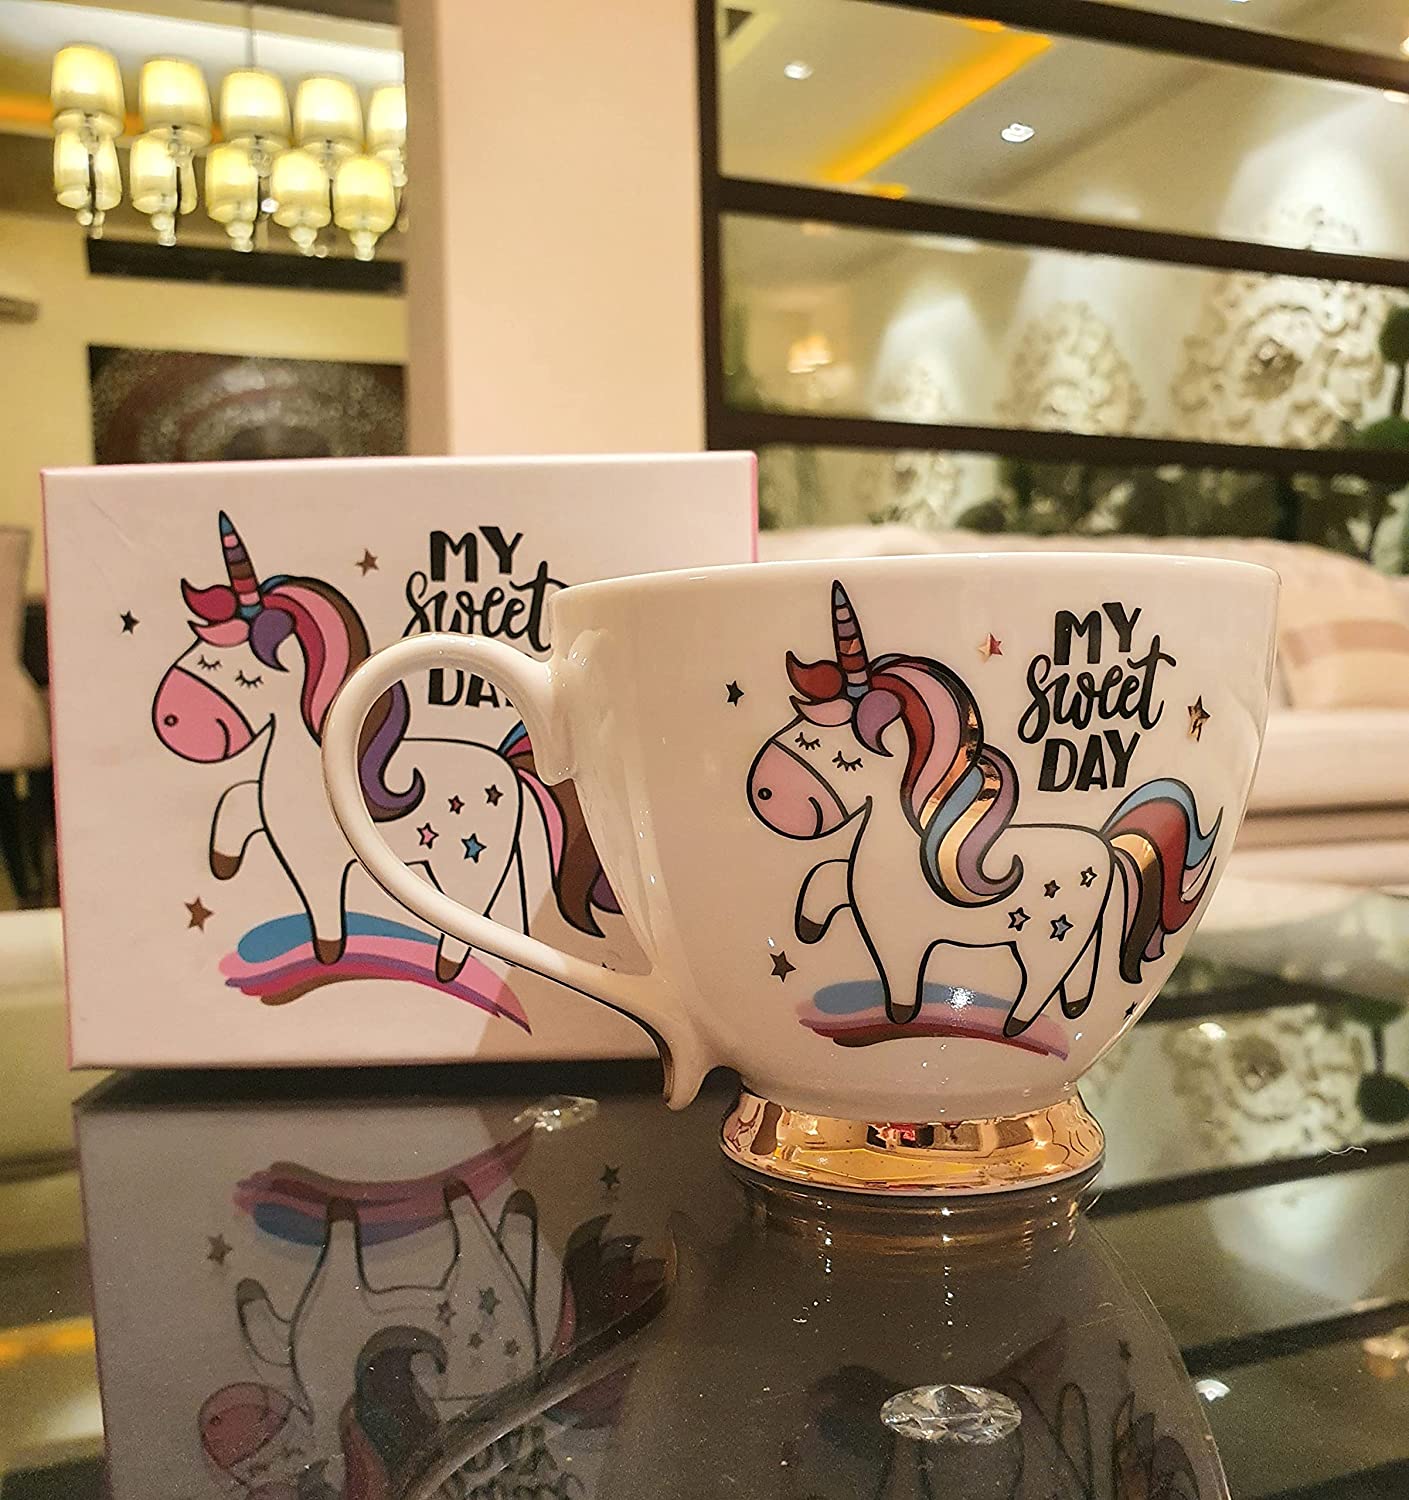 EMERGE 3D Unicorn Coffee Mug Ceramic Coffee Mugs 250ML